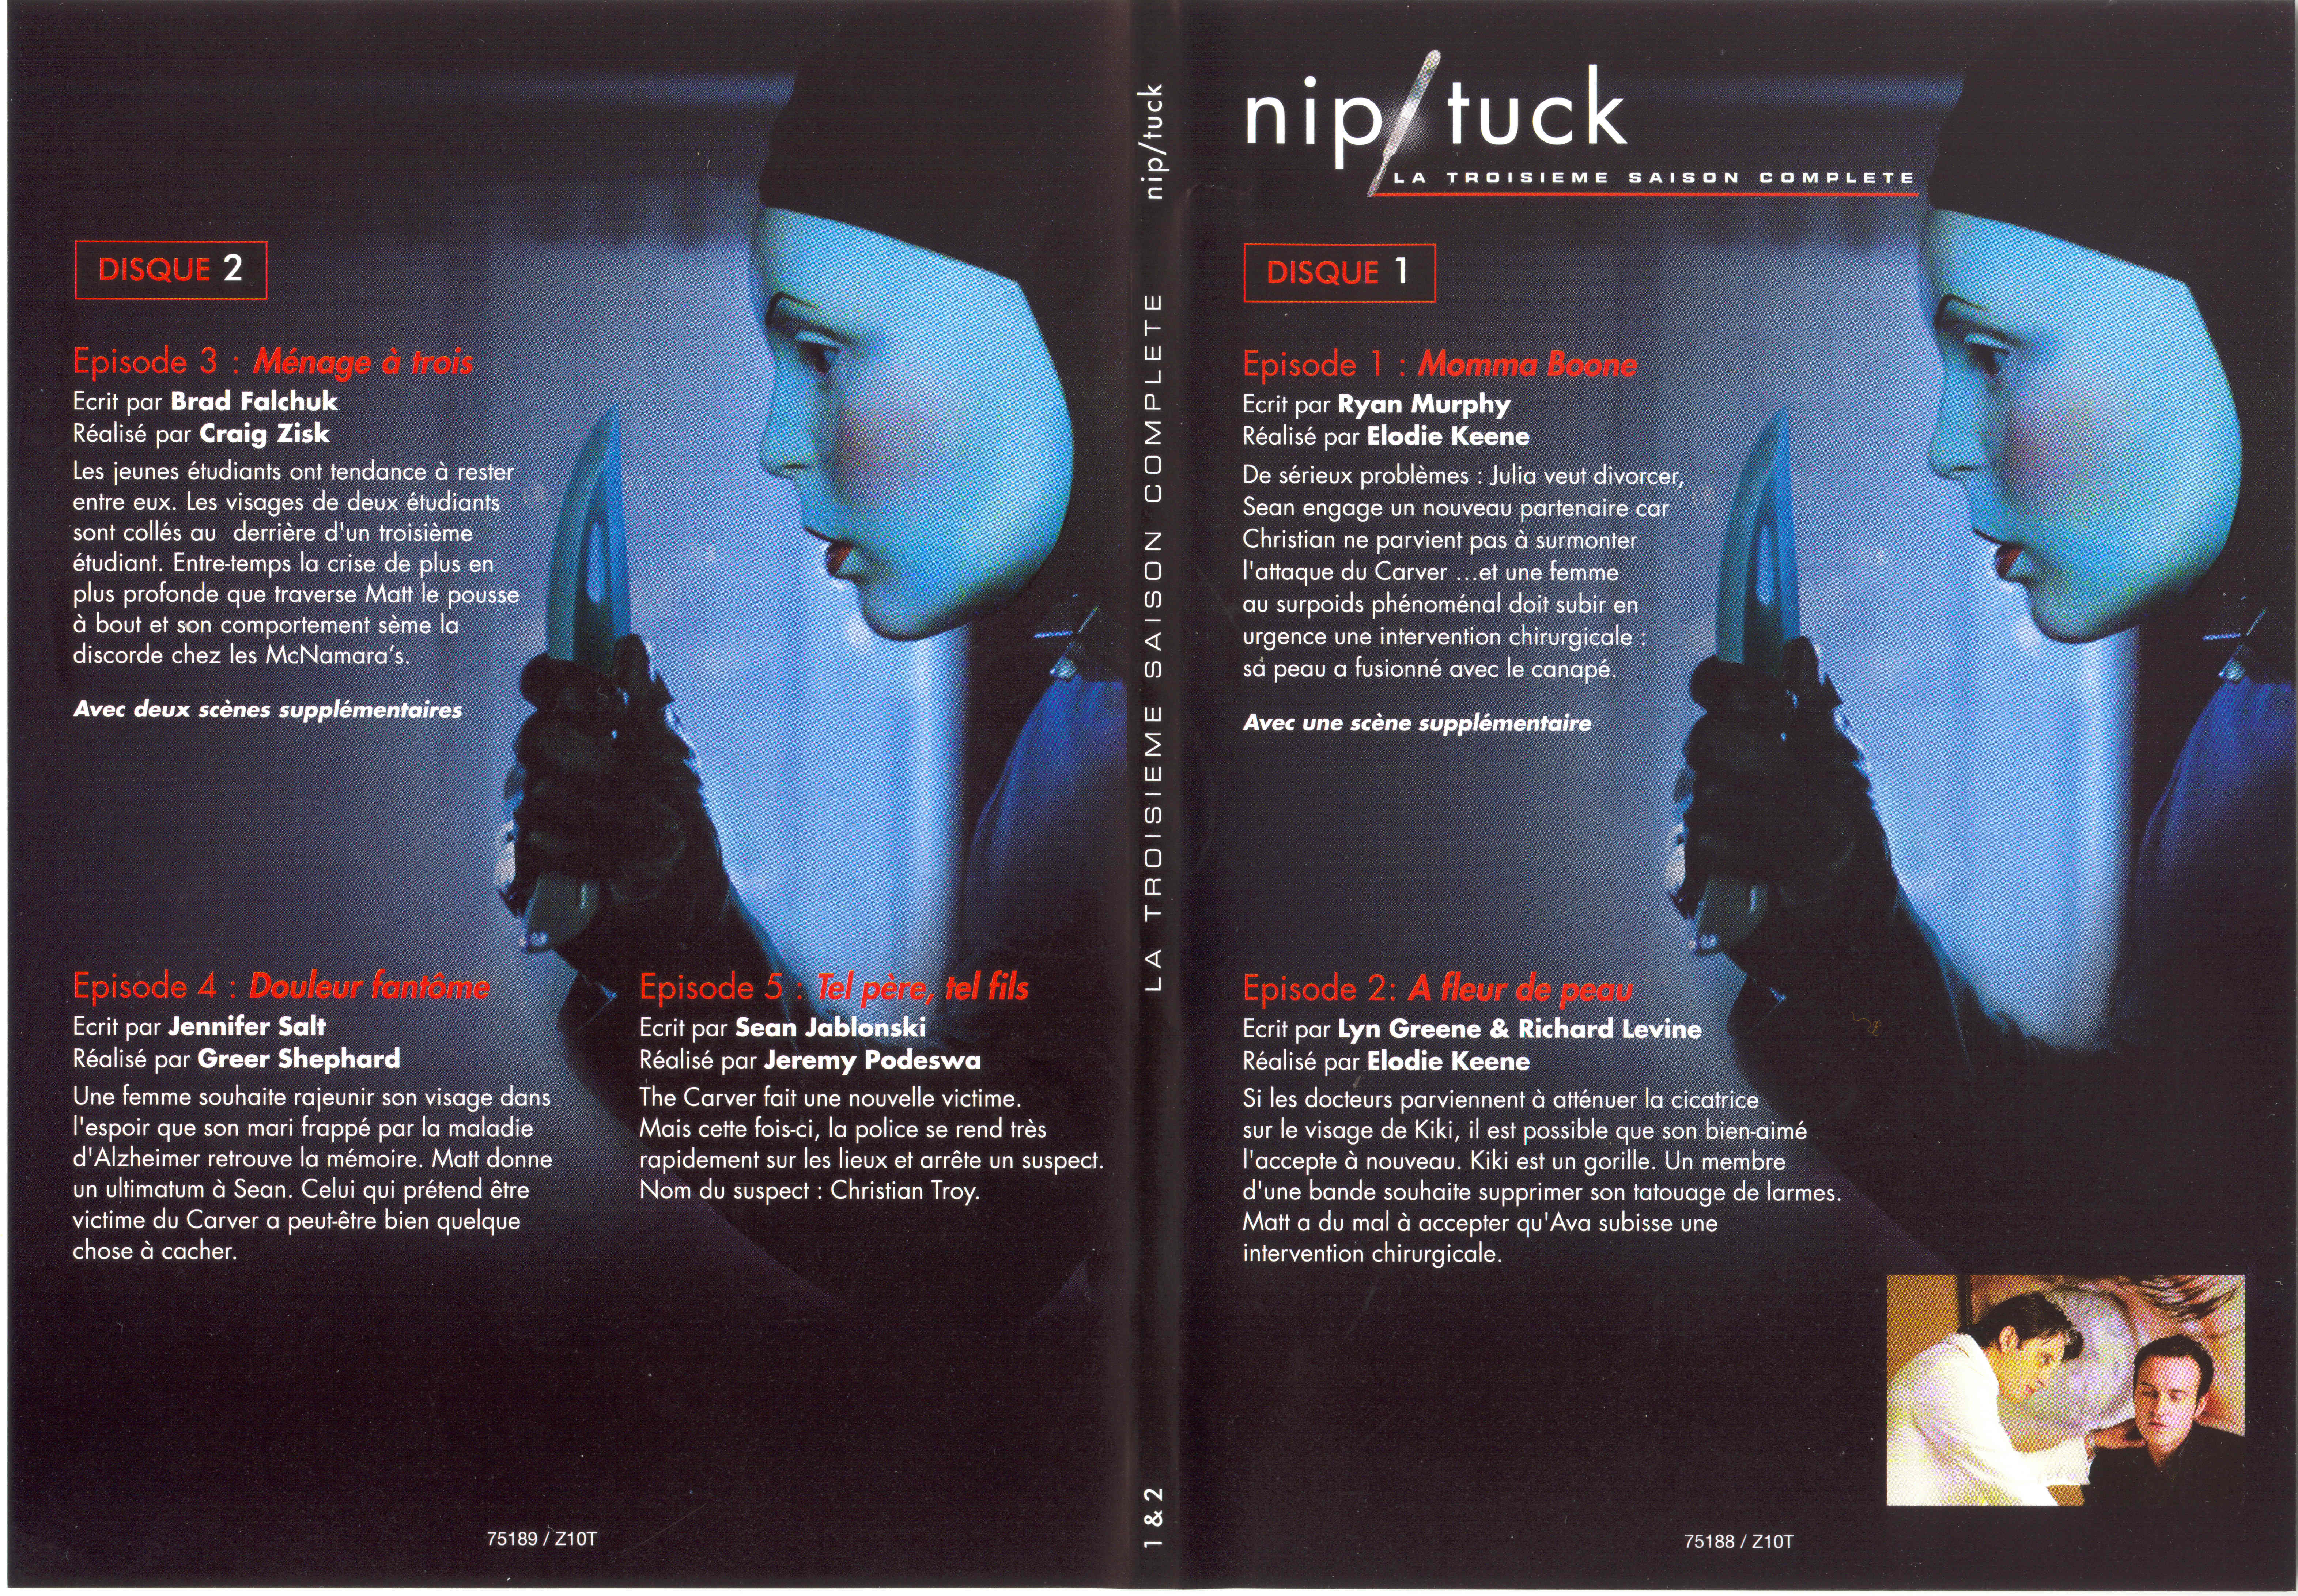 Jaquette DVD Nip-Tuck saison 3 DVD 1